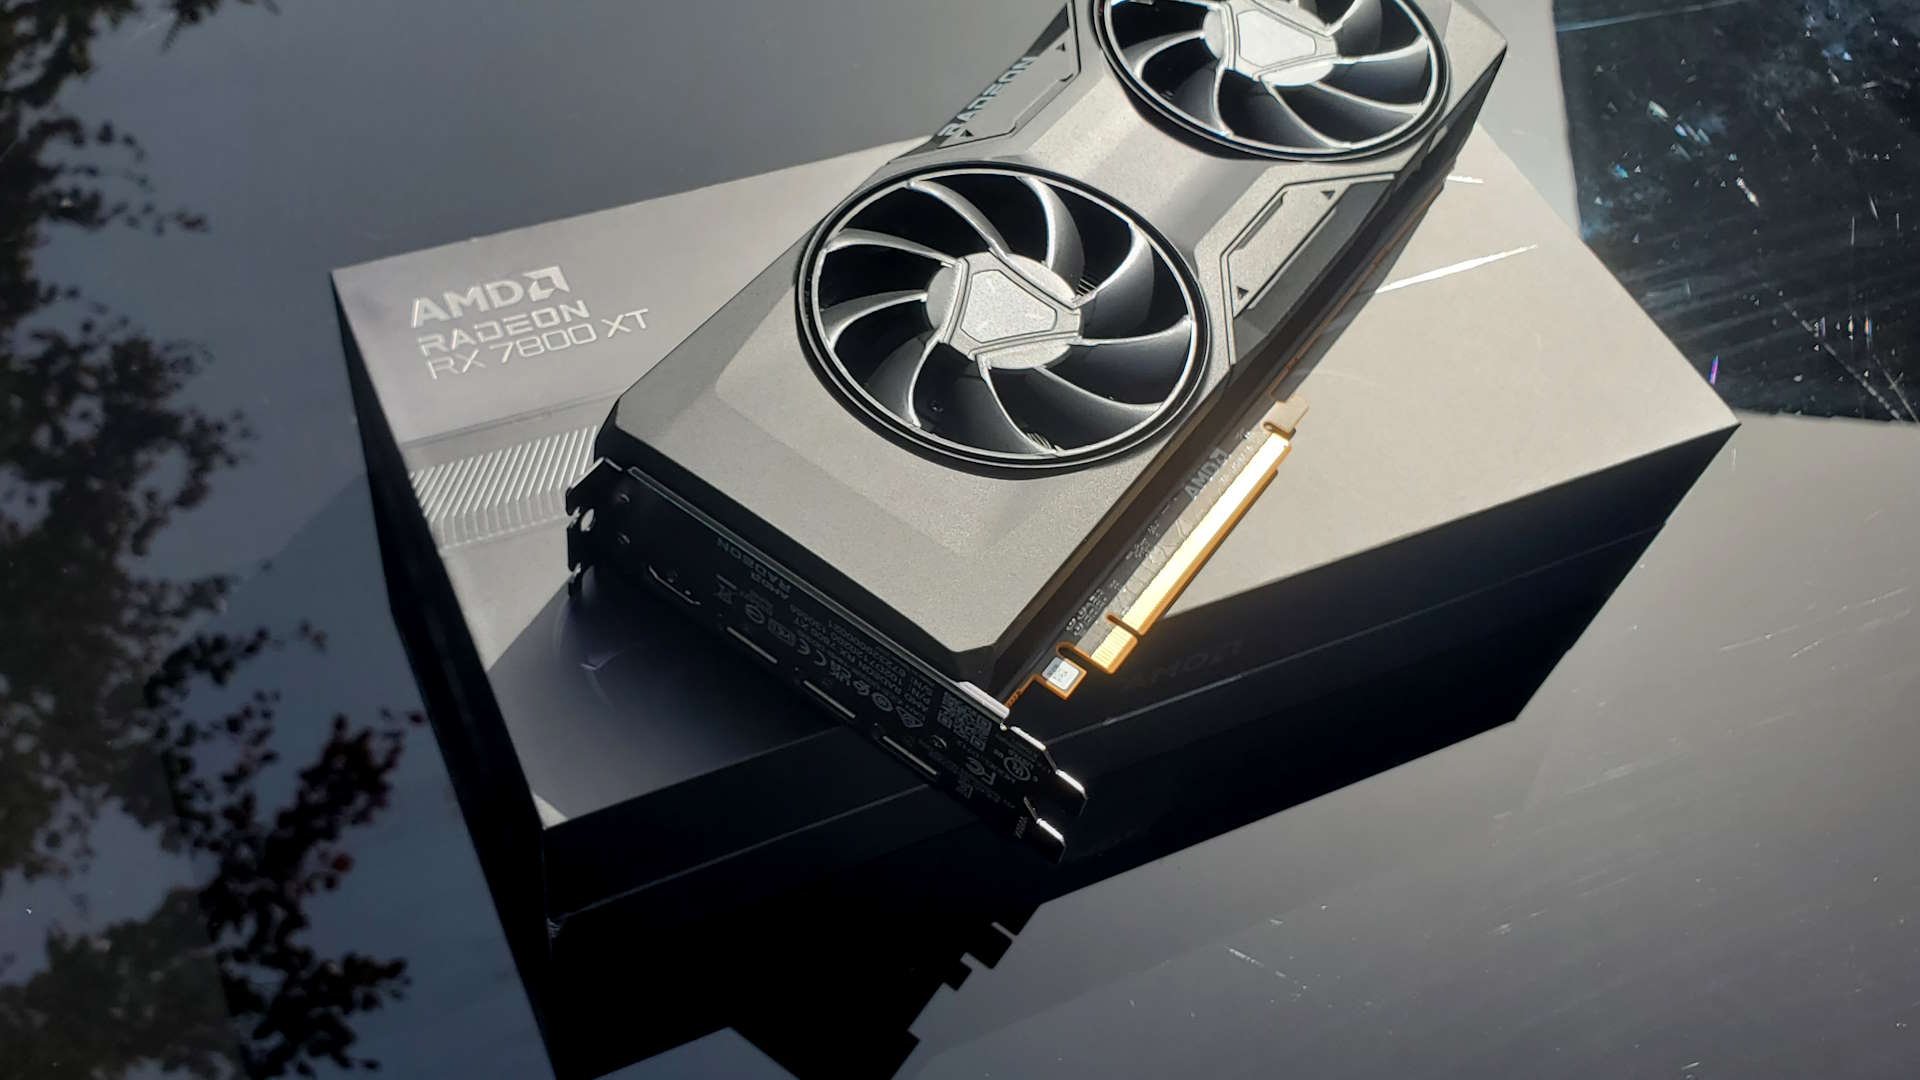 AMD Radeon RX 6800 XT tested in Multi-GPU configuration , rx 6800 xt 